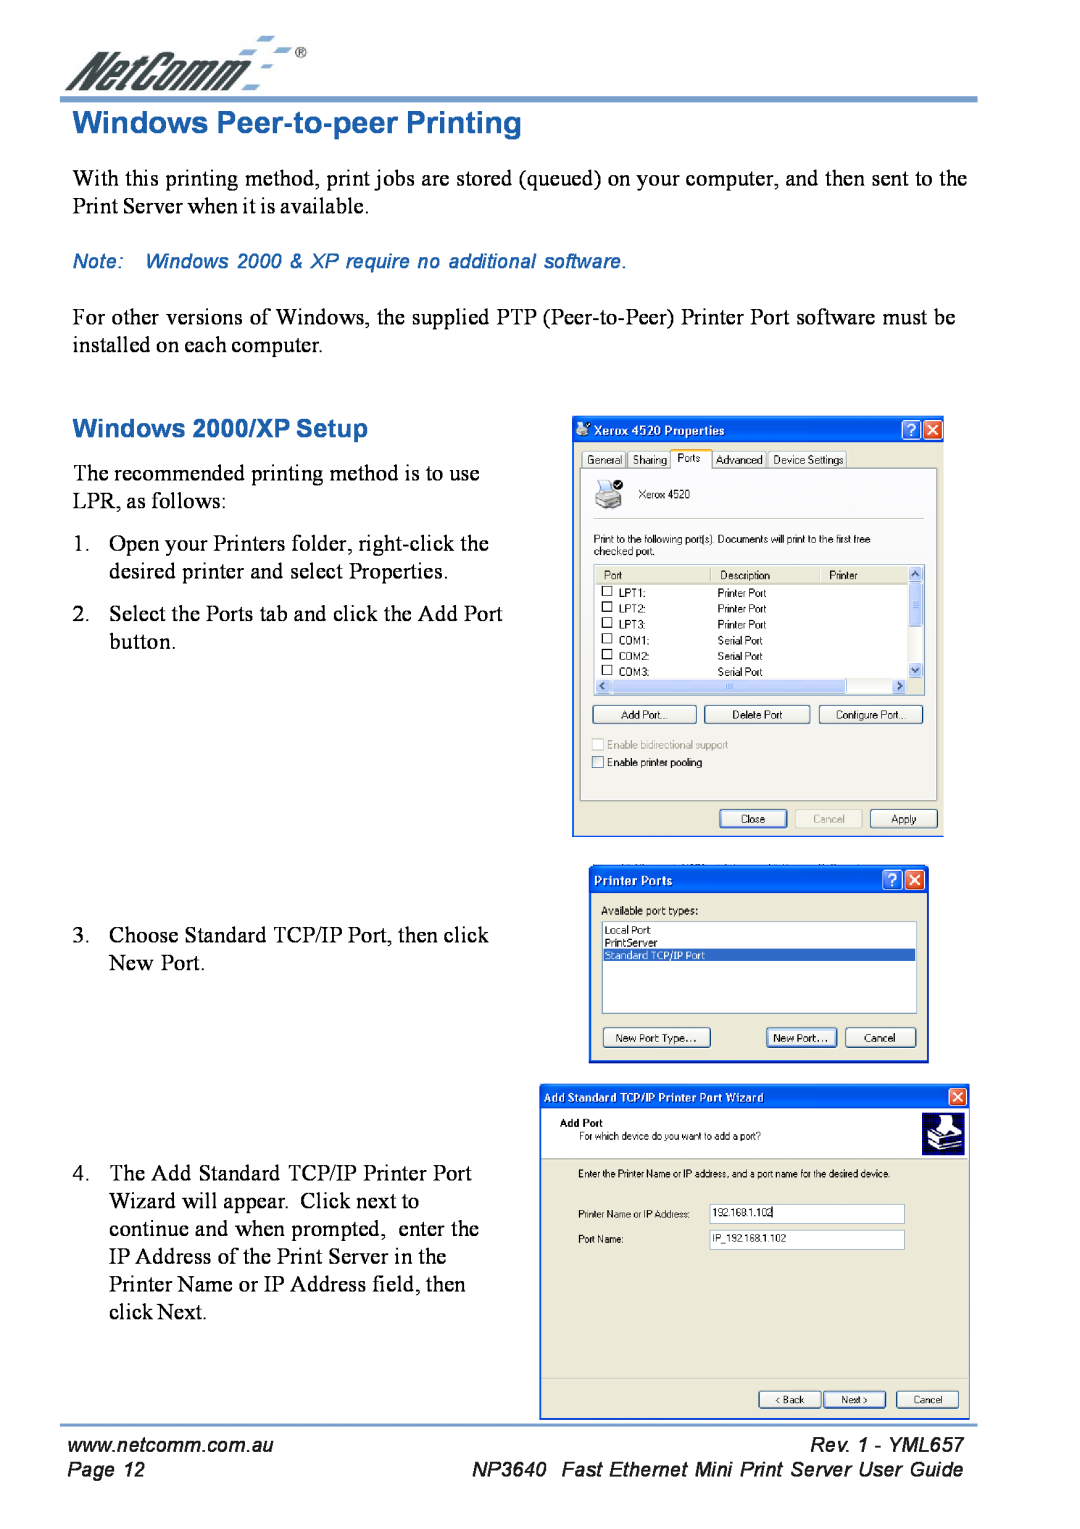 NetComm NP3640 manual Windows Peer-to-peer Printing, Windows 2000/XP Setup 